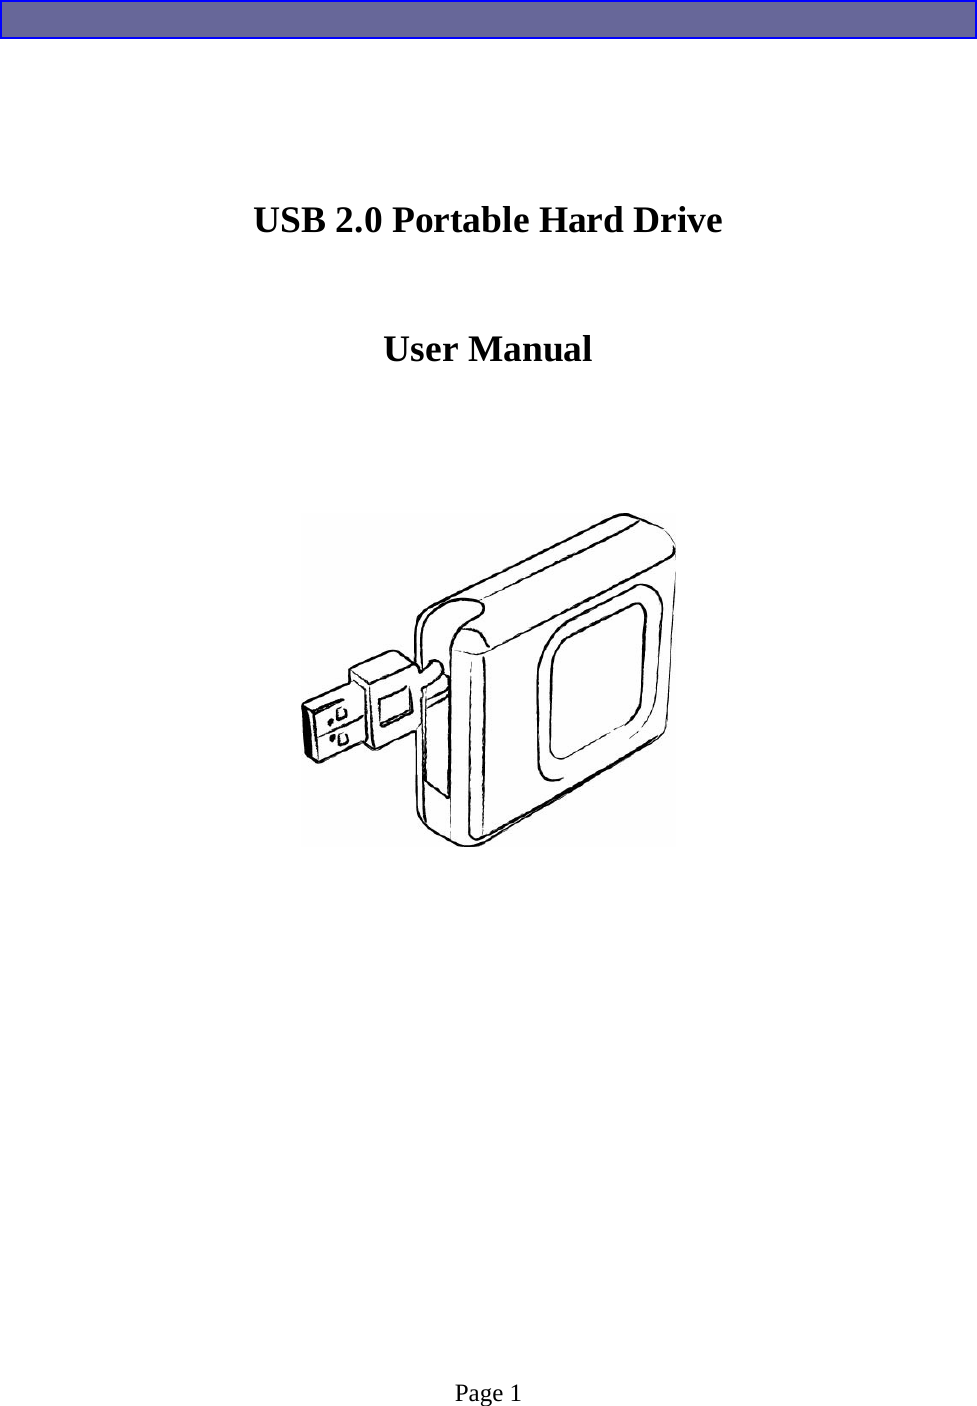        USB 2.0 Portable Hard Drive   User Manual                      Page 1 